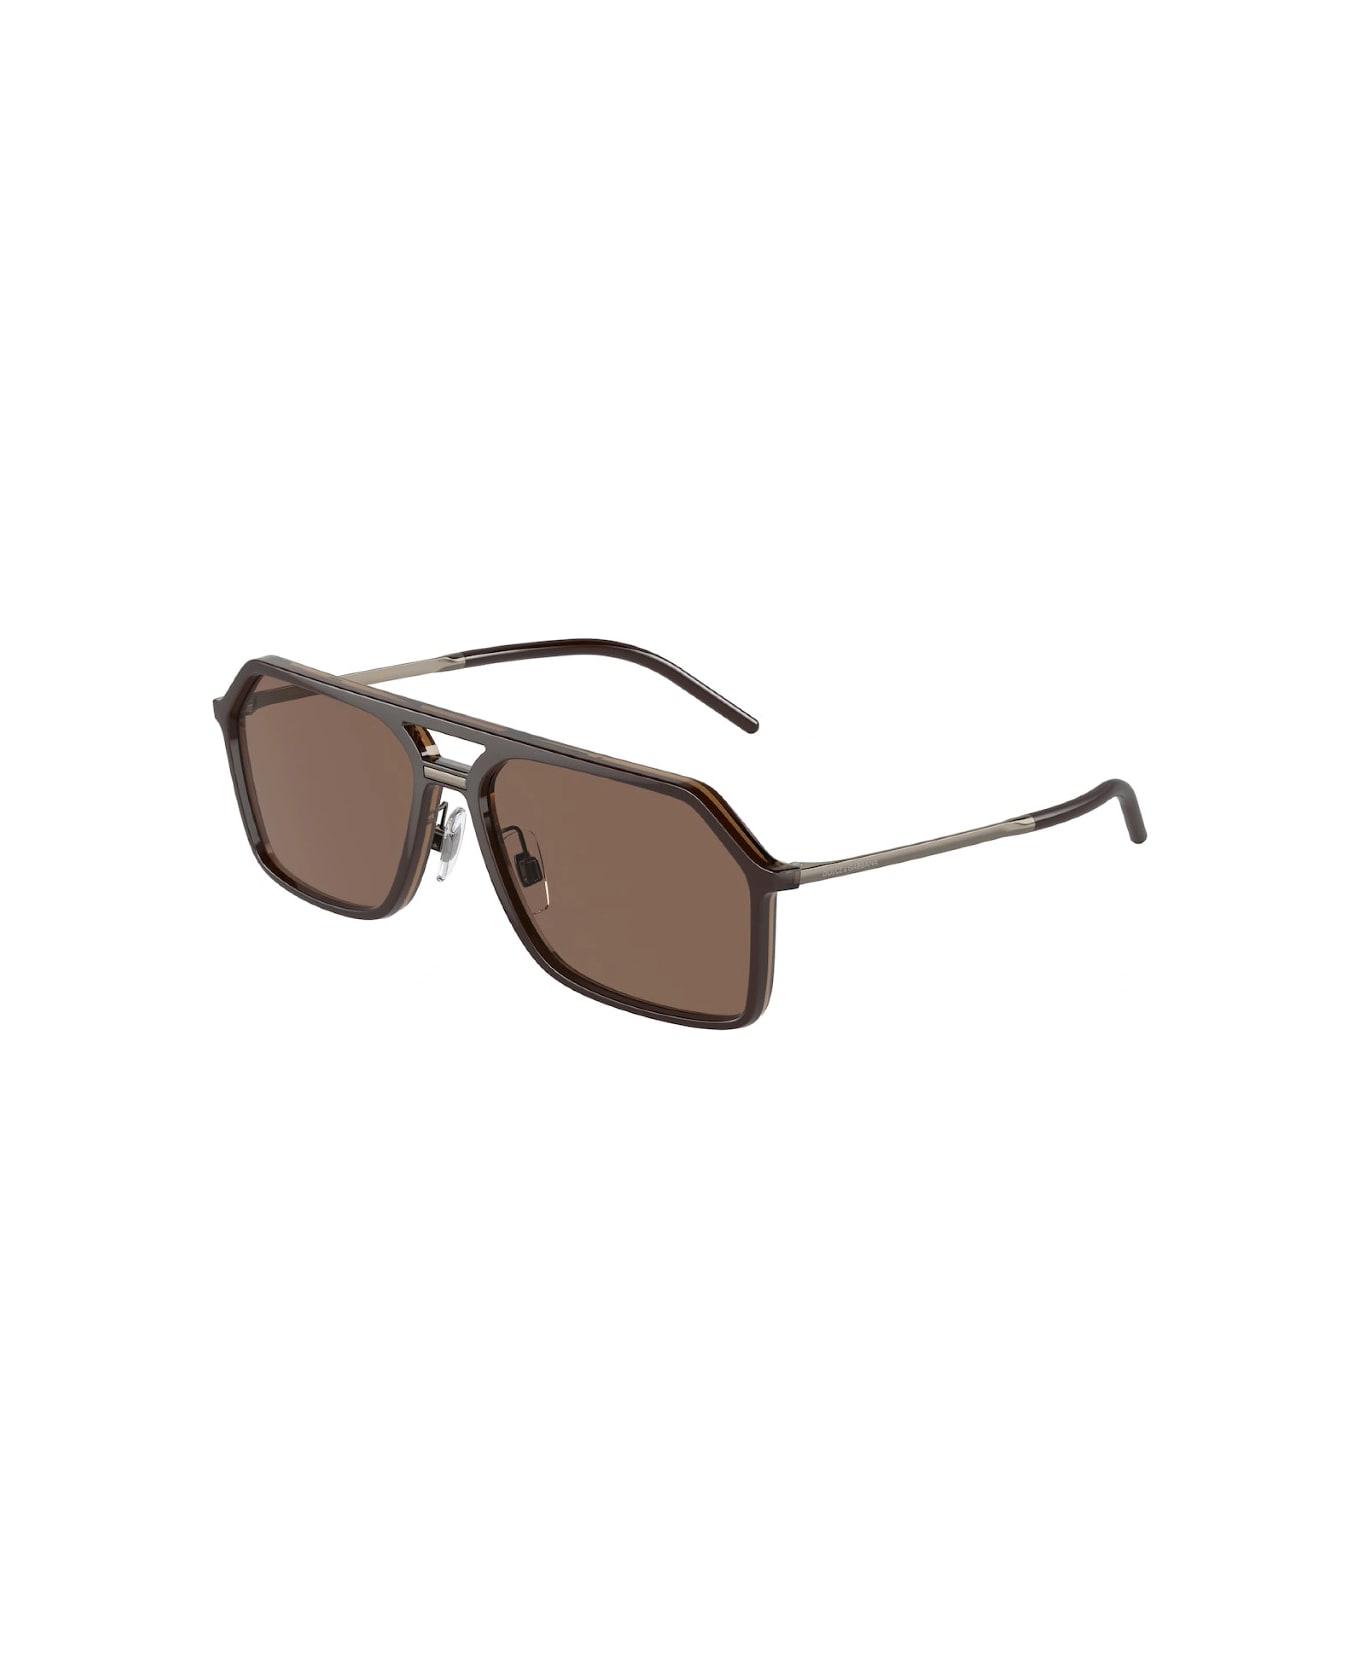 Saint Laurent Saint Laurent Sl 429 Silver Sunglasses Eyewear DG6196 3159/73 Sunglasses - Marrone